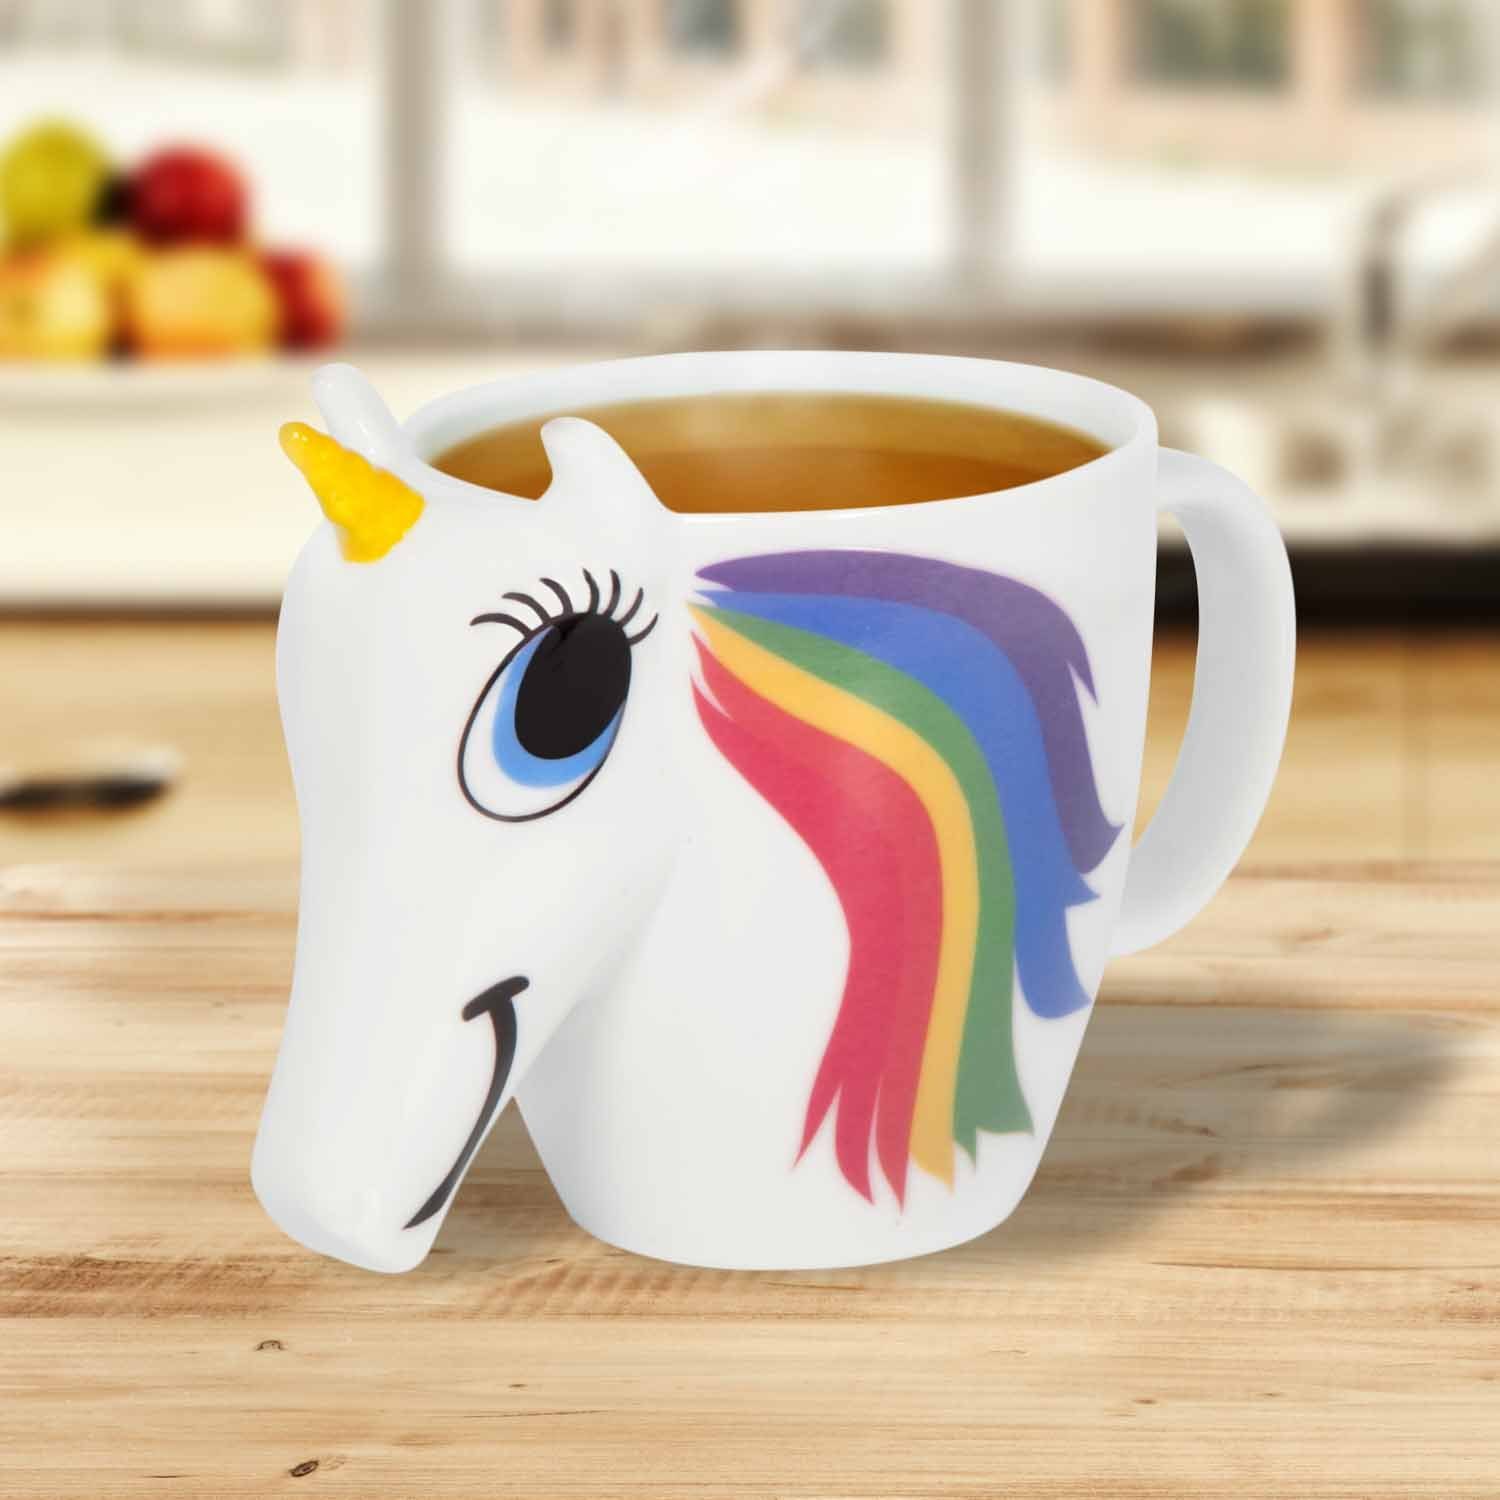 Thumbs Up Tasse Keramik, - Einhorn Tasse Farbwechsel, mit Farbwechseleffekt "Unicorn Tasse Mug"